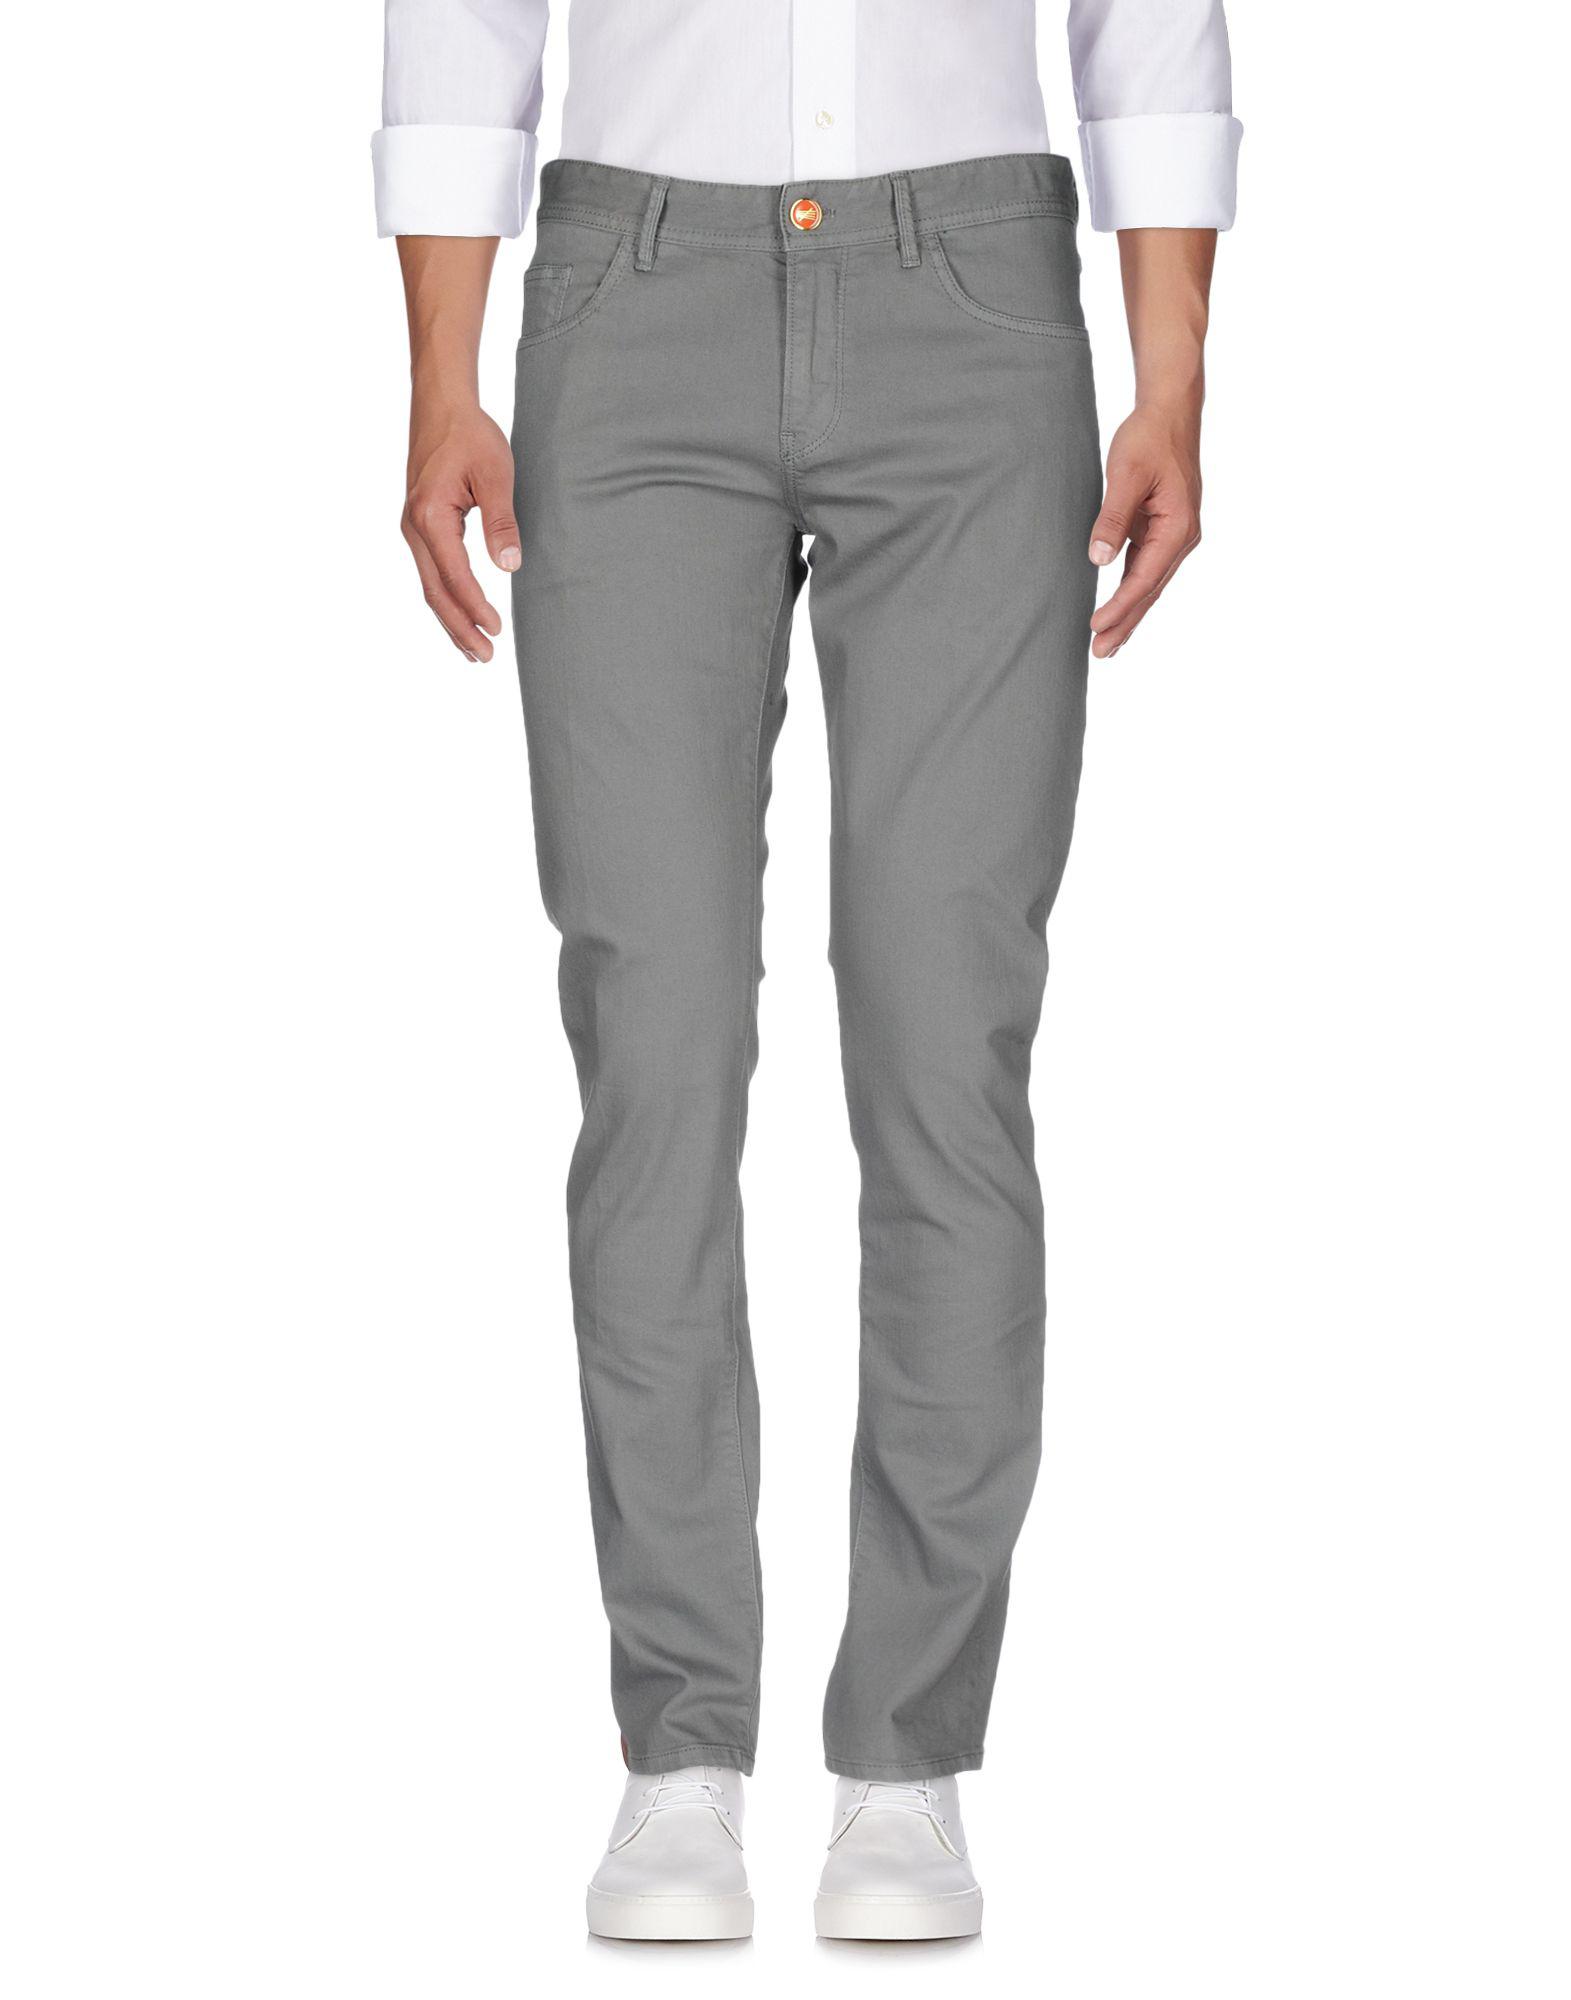 Pt05 Denim Trousers in Grey (Gray) for Men - Lyst